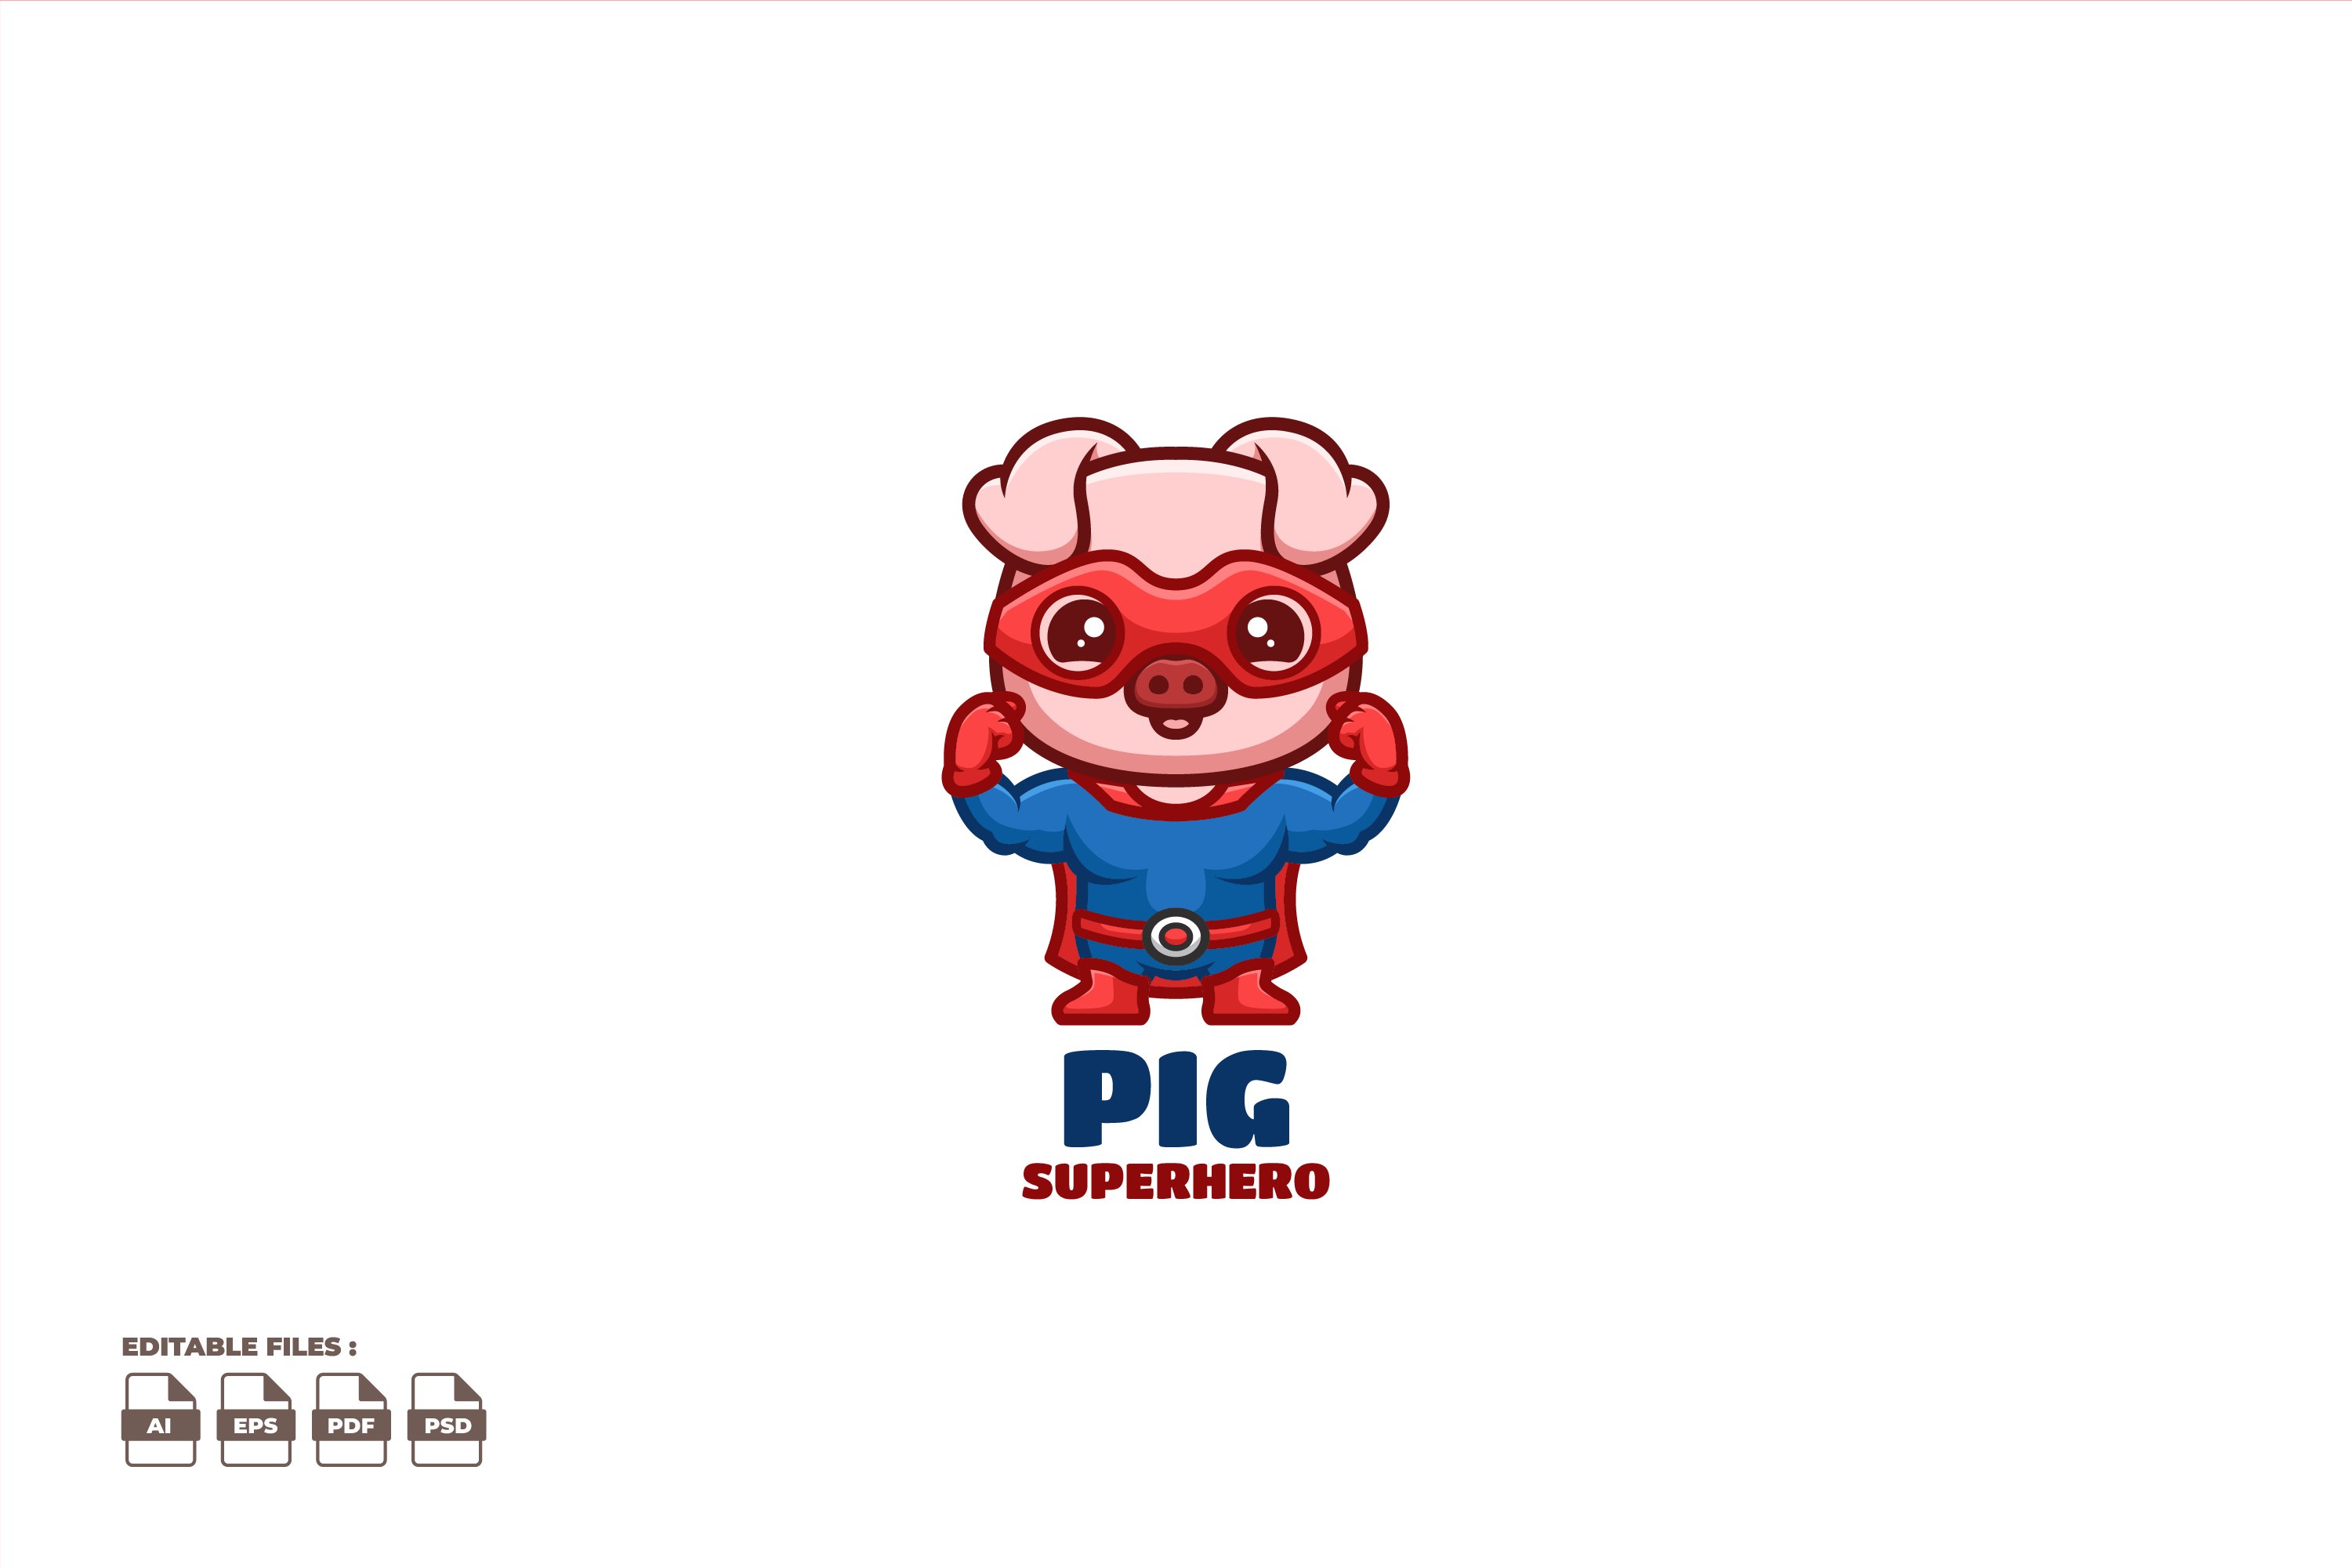 Super Hero Pig Cute Mascot Logo cover image.